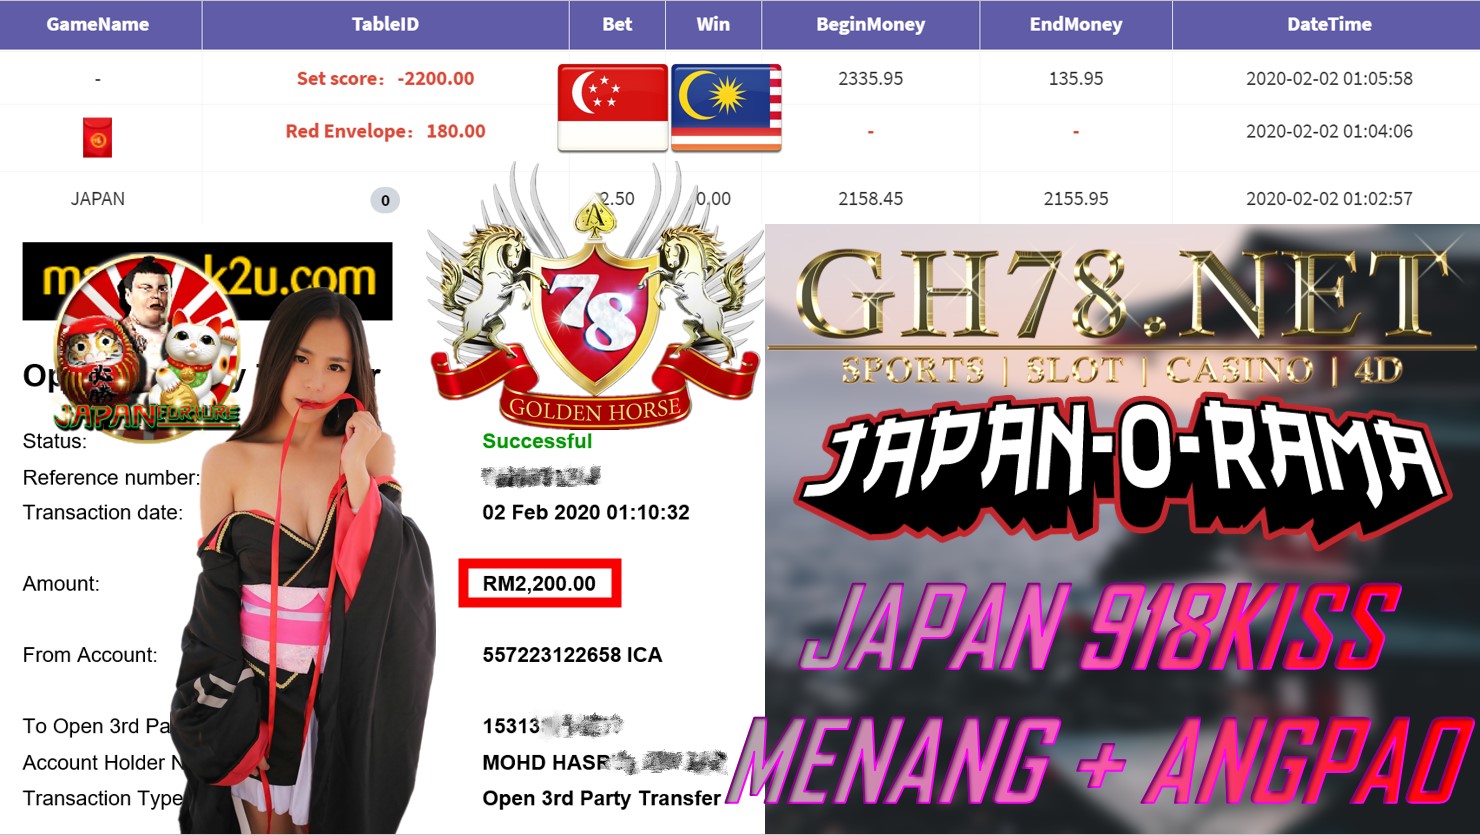 2020 NEW YEAR !!! MEMBER MAIN 918KISS, JAPAN + ANGPAO ,WITHDRAW RM2200 !!!